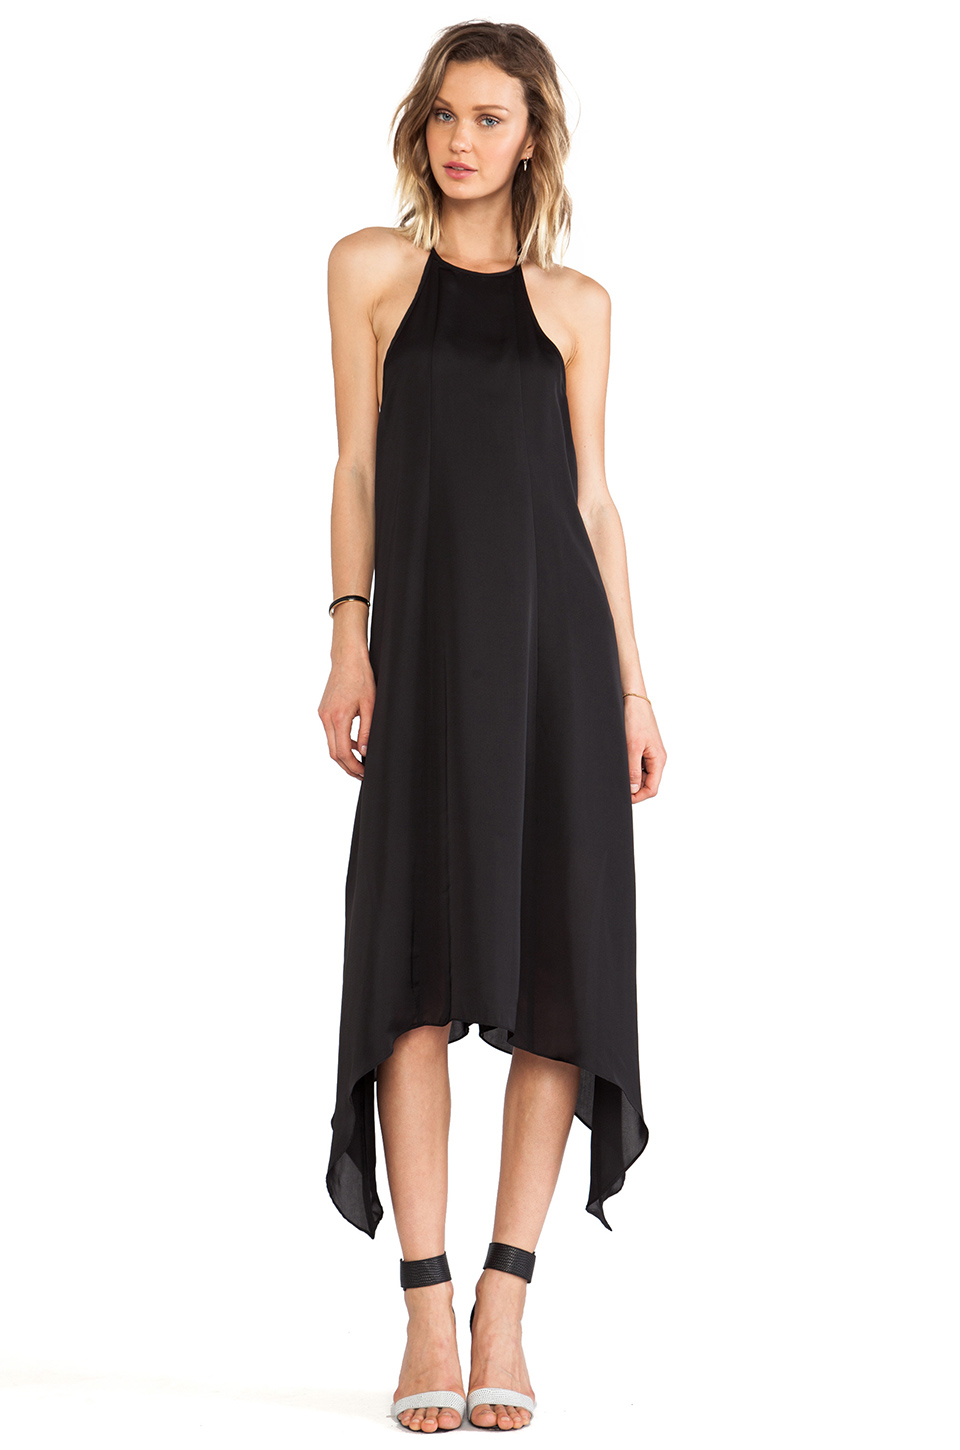 Lyst - Jarlo Nyane Dress in Black